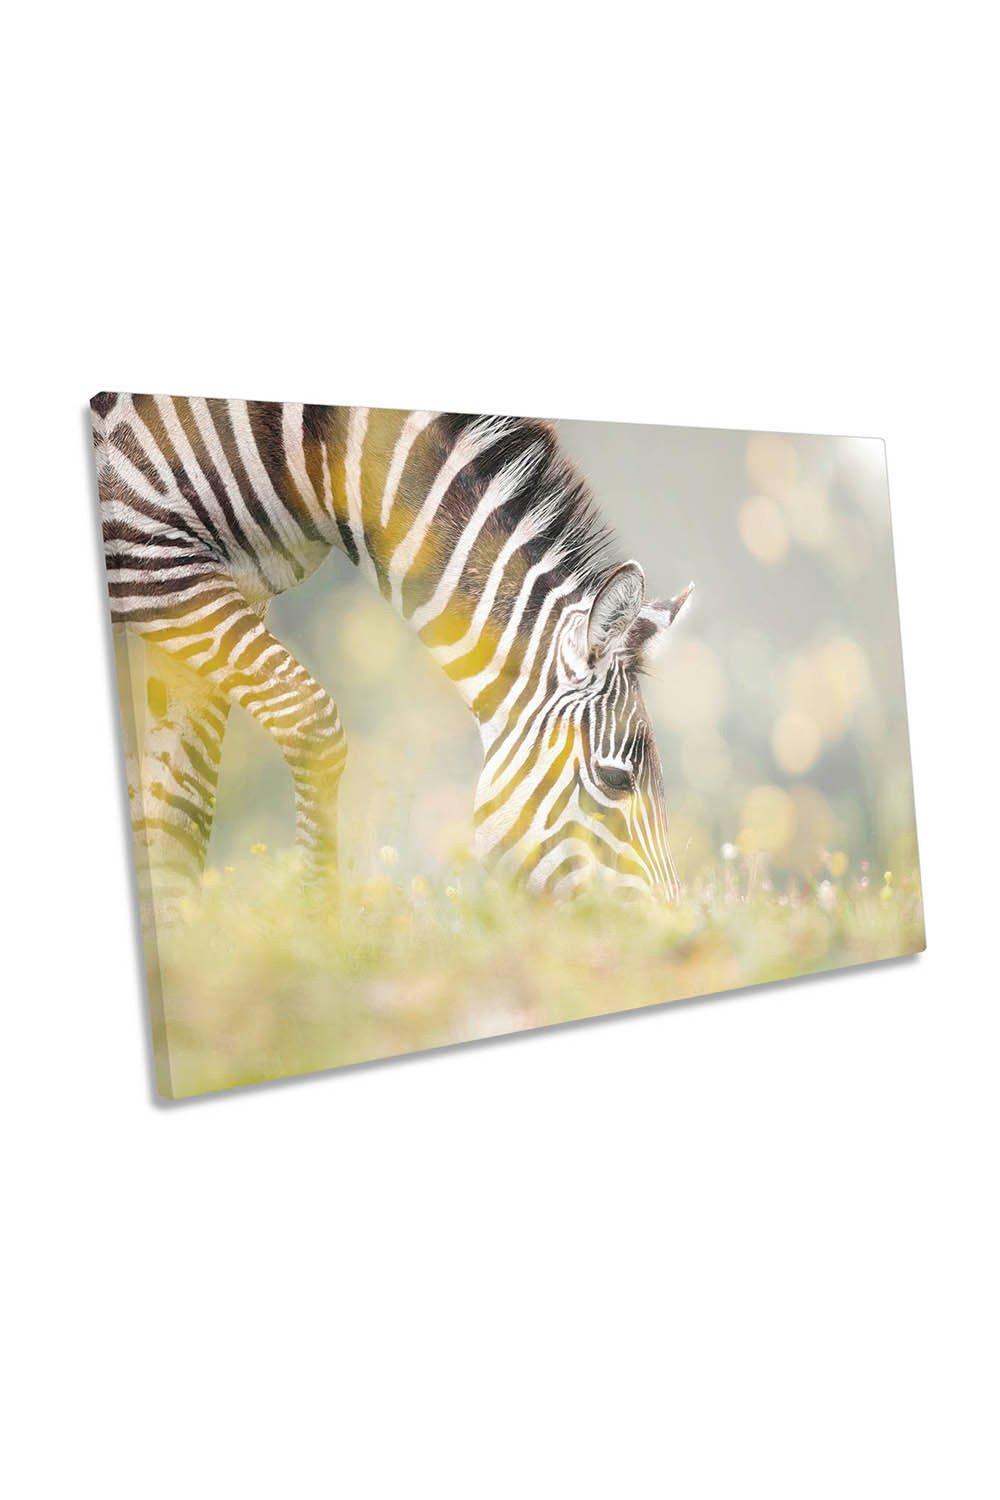 Breakfast Zebra Stripes Floral Canvas Wall Art Picture Print